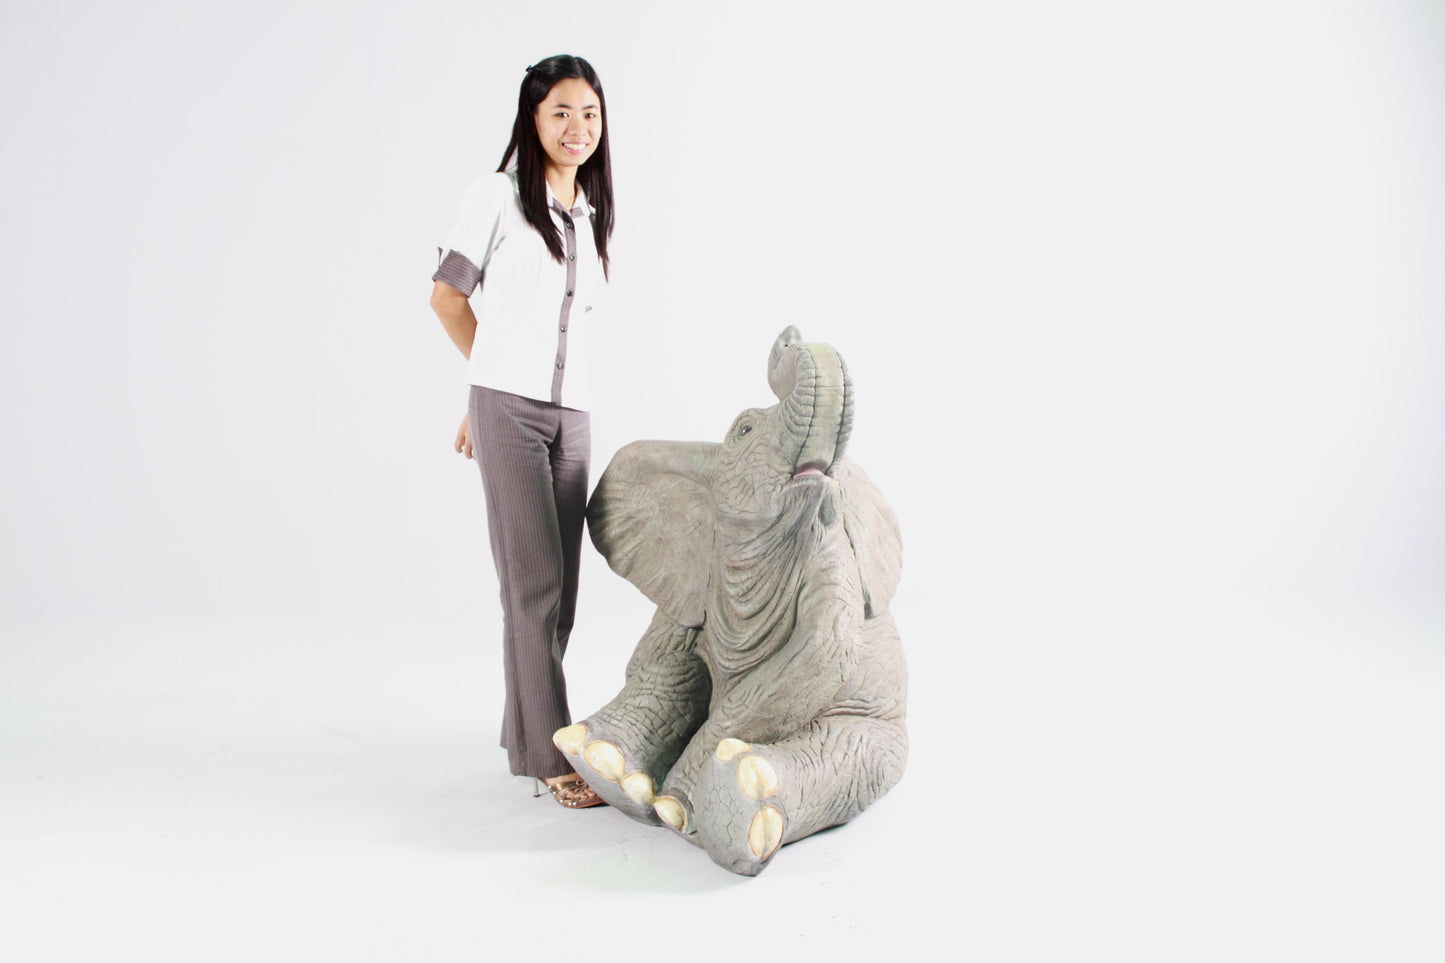 Sitting Baby Elephant Statue - LM Treasures Prop Rentals 